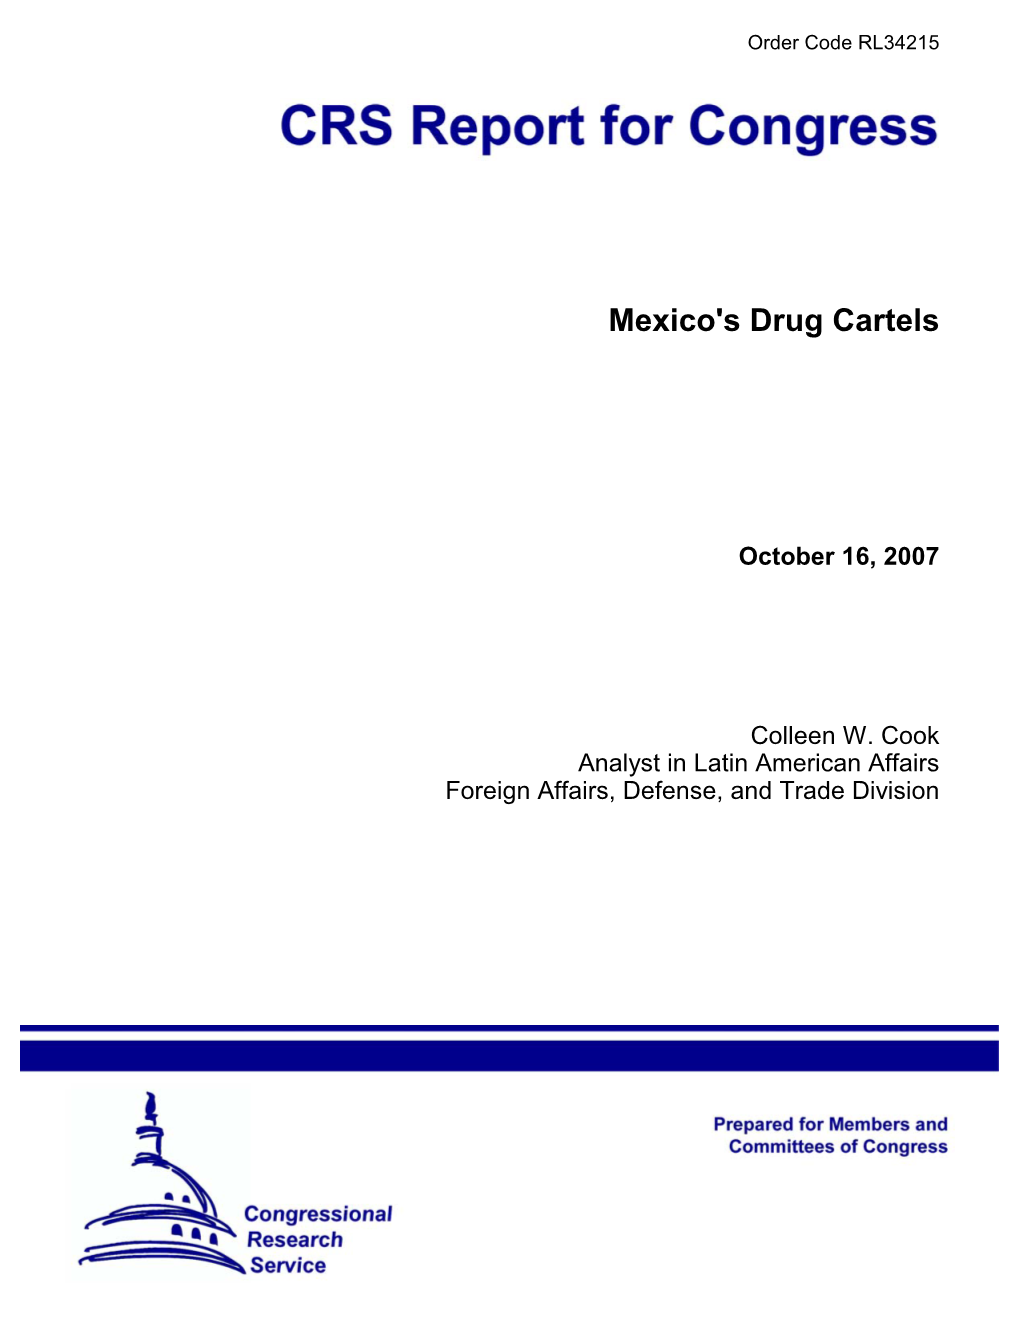 Mexico's Drug Cartels